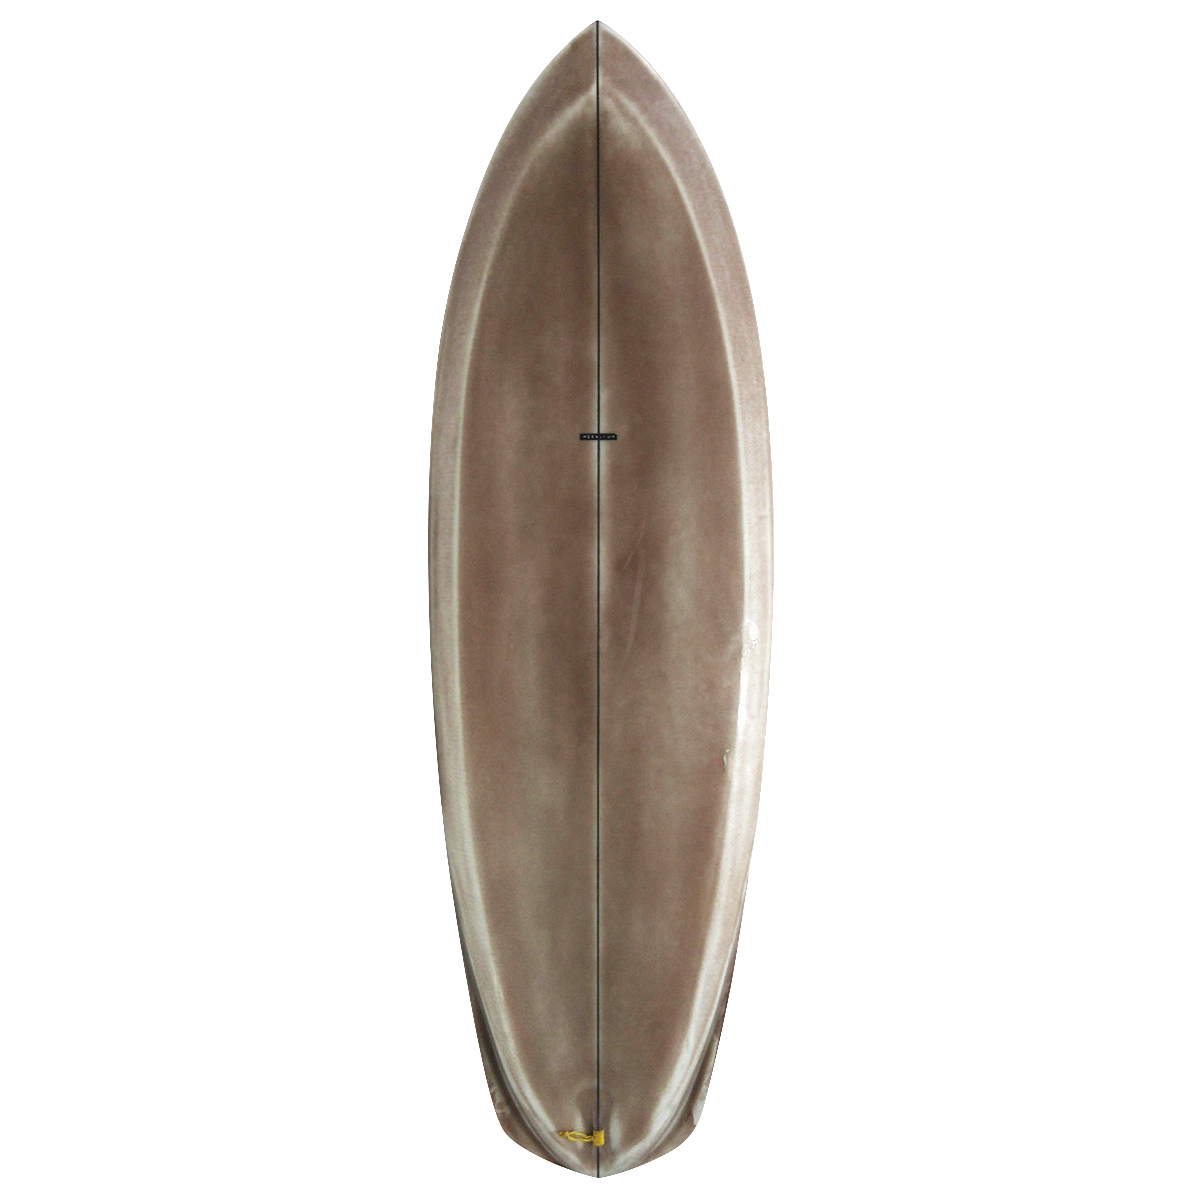 Mccallum Surfboards / Flextail Egg 5'8.5 Shaped By Jeff Mccallum